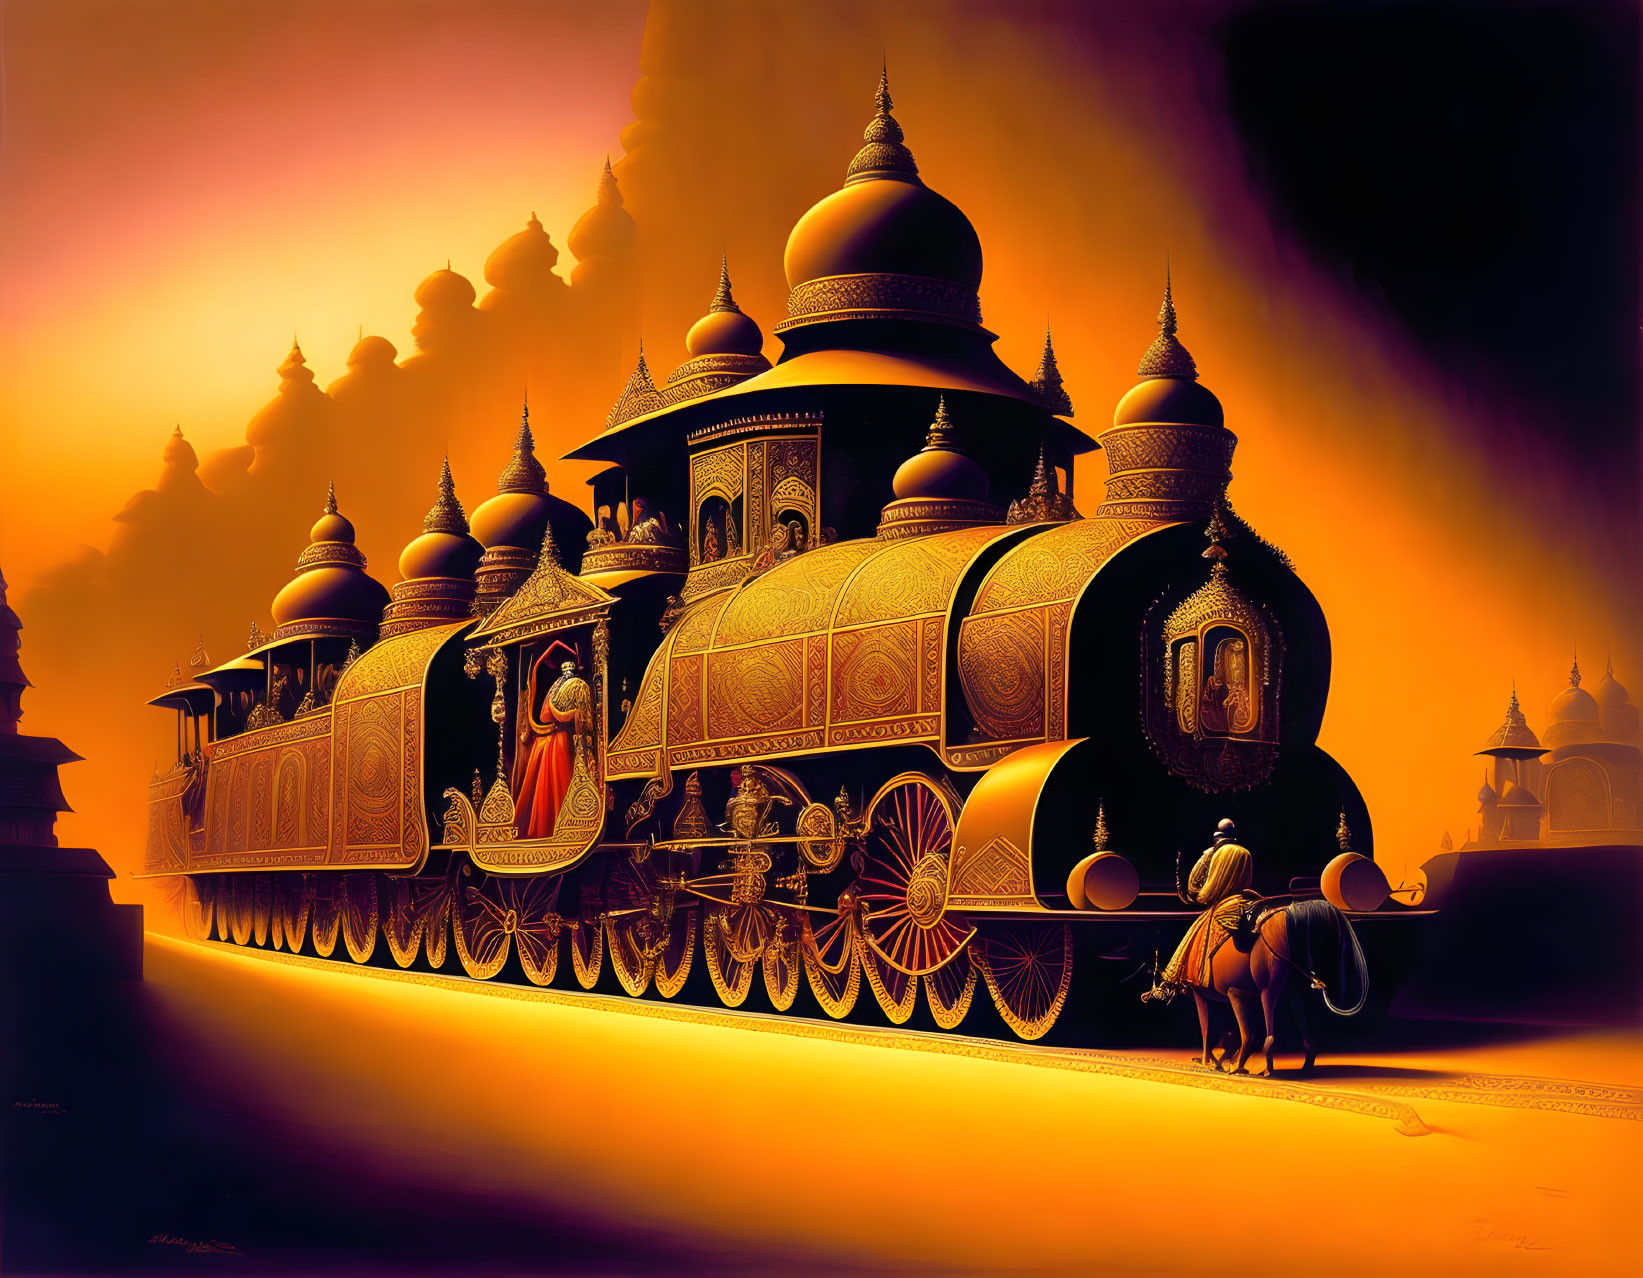 Train of the Maharaja comes to Bombay